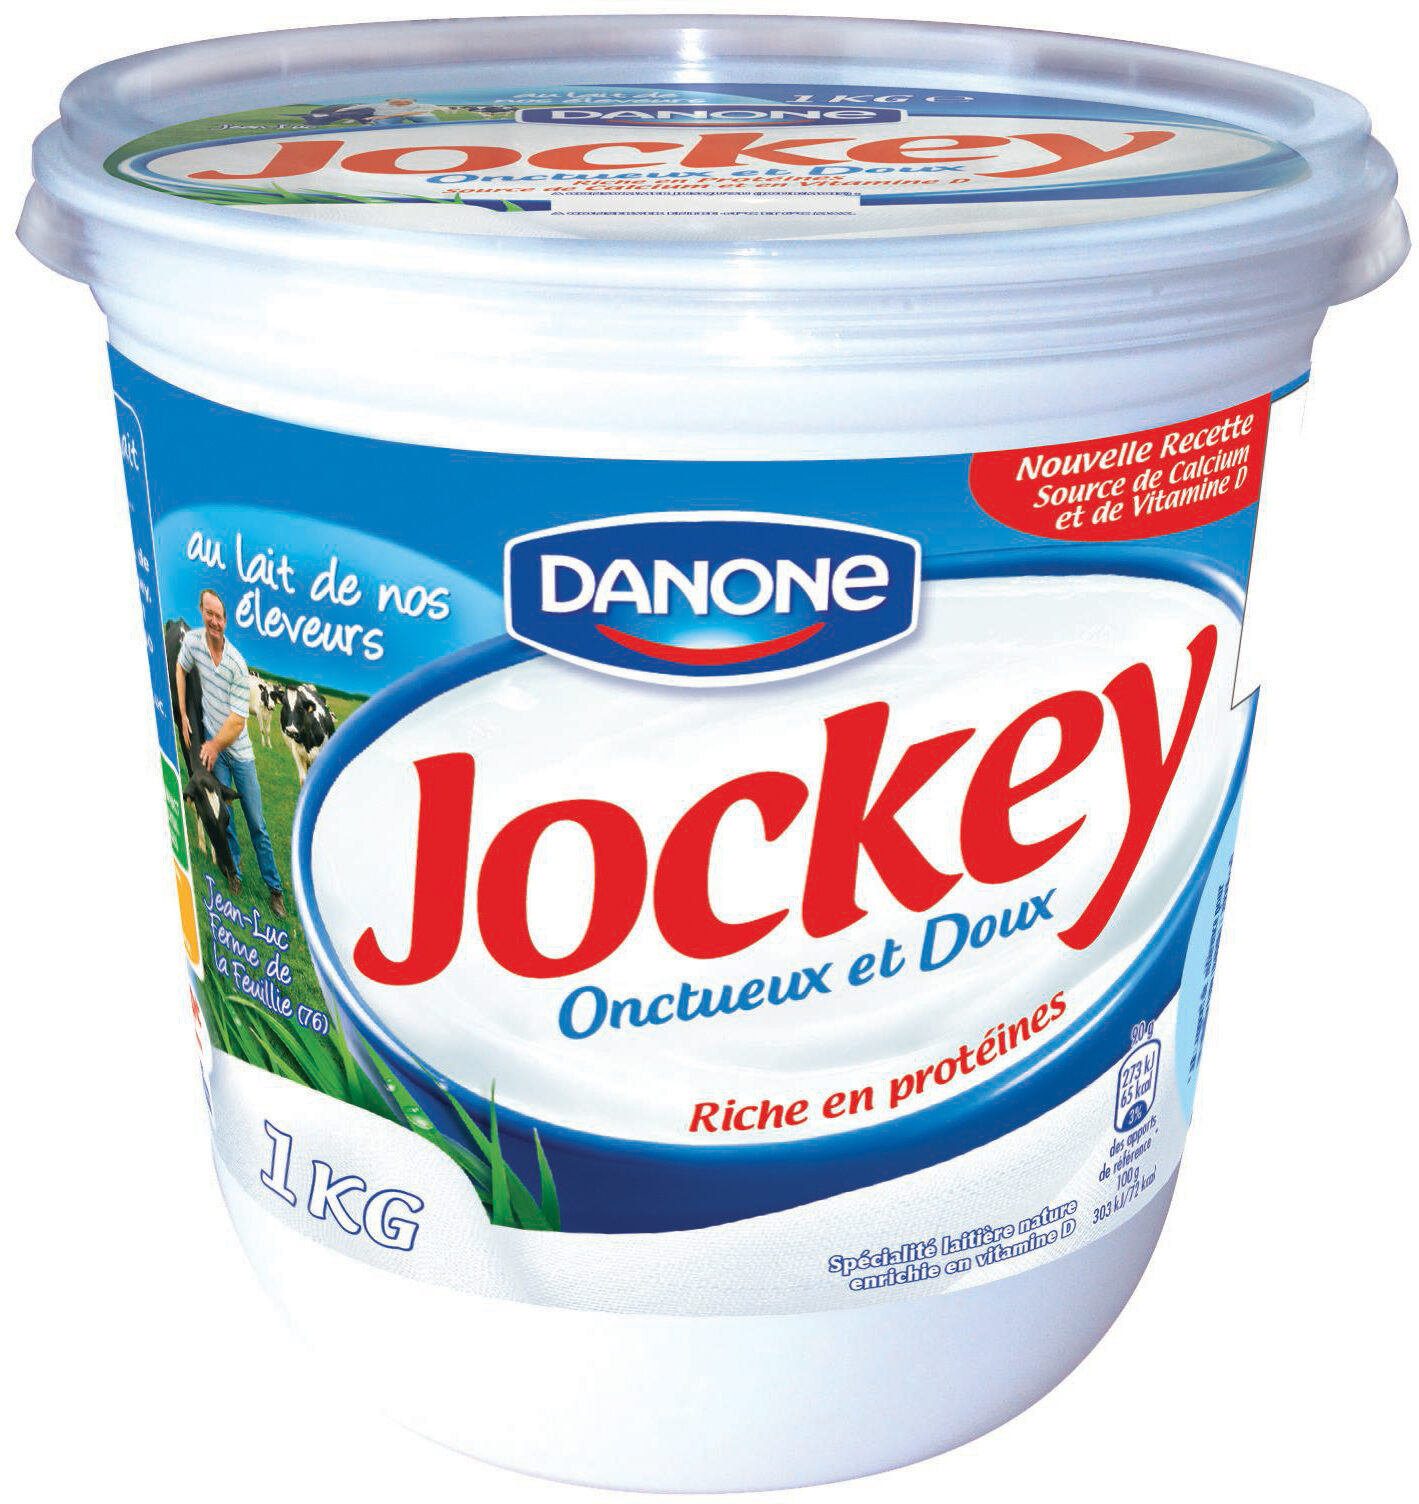 Jockey 3% de mg nature 1 kg x 1 - Product - fr